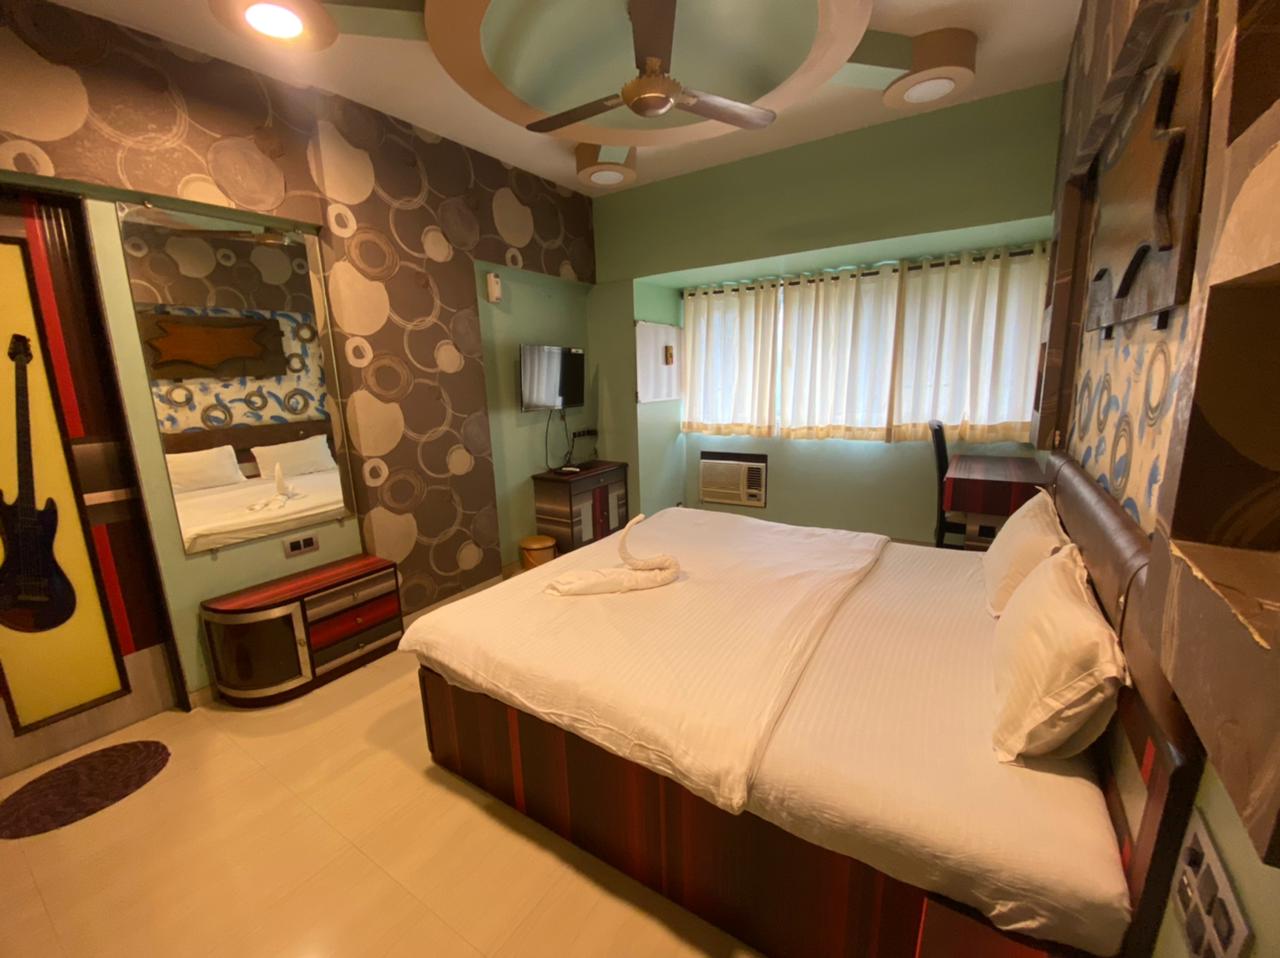 Short Term Rental Apartment In Malad